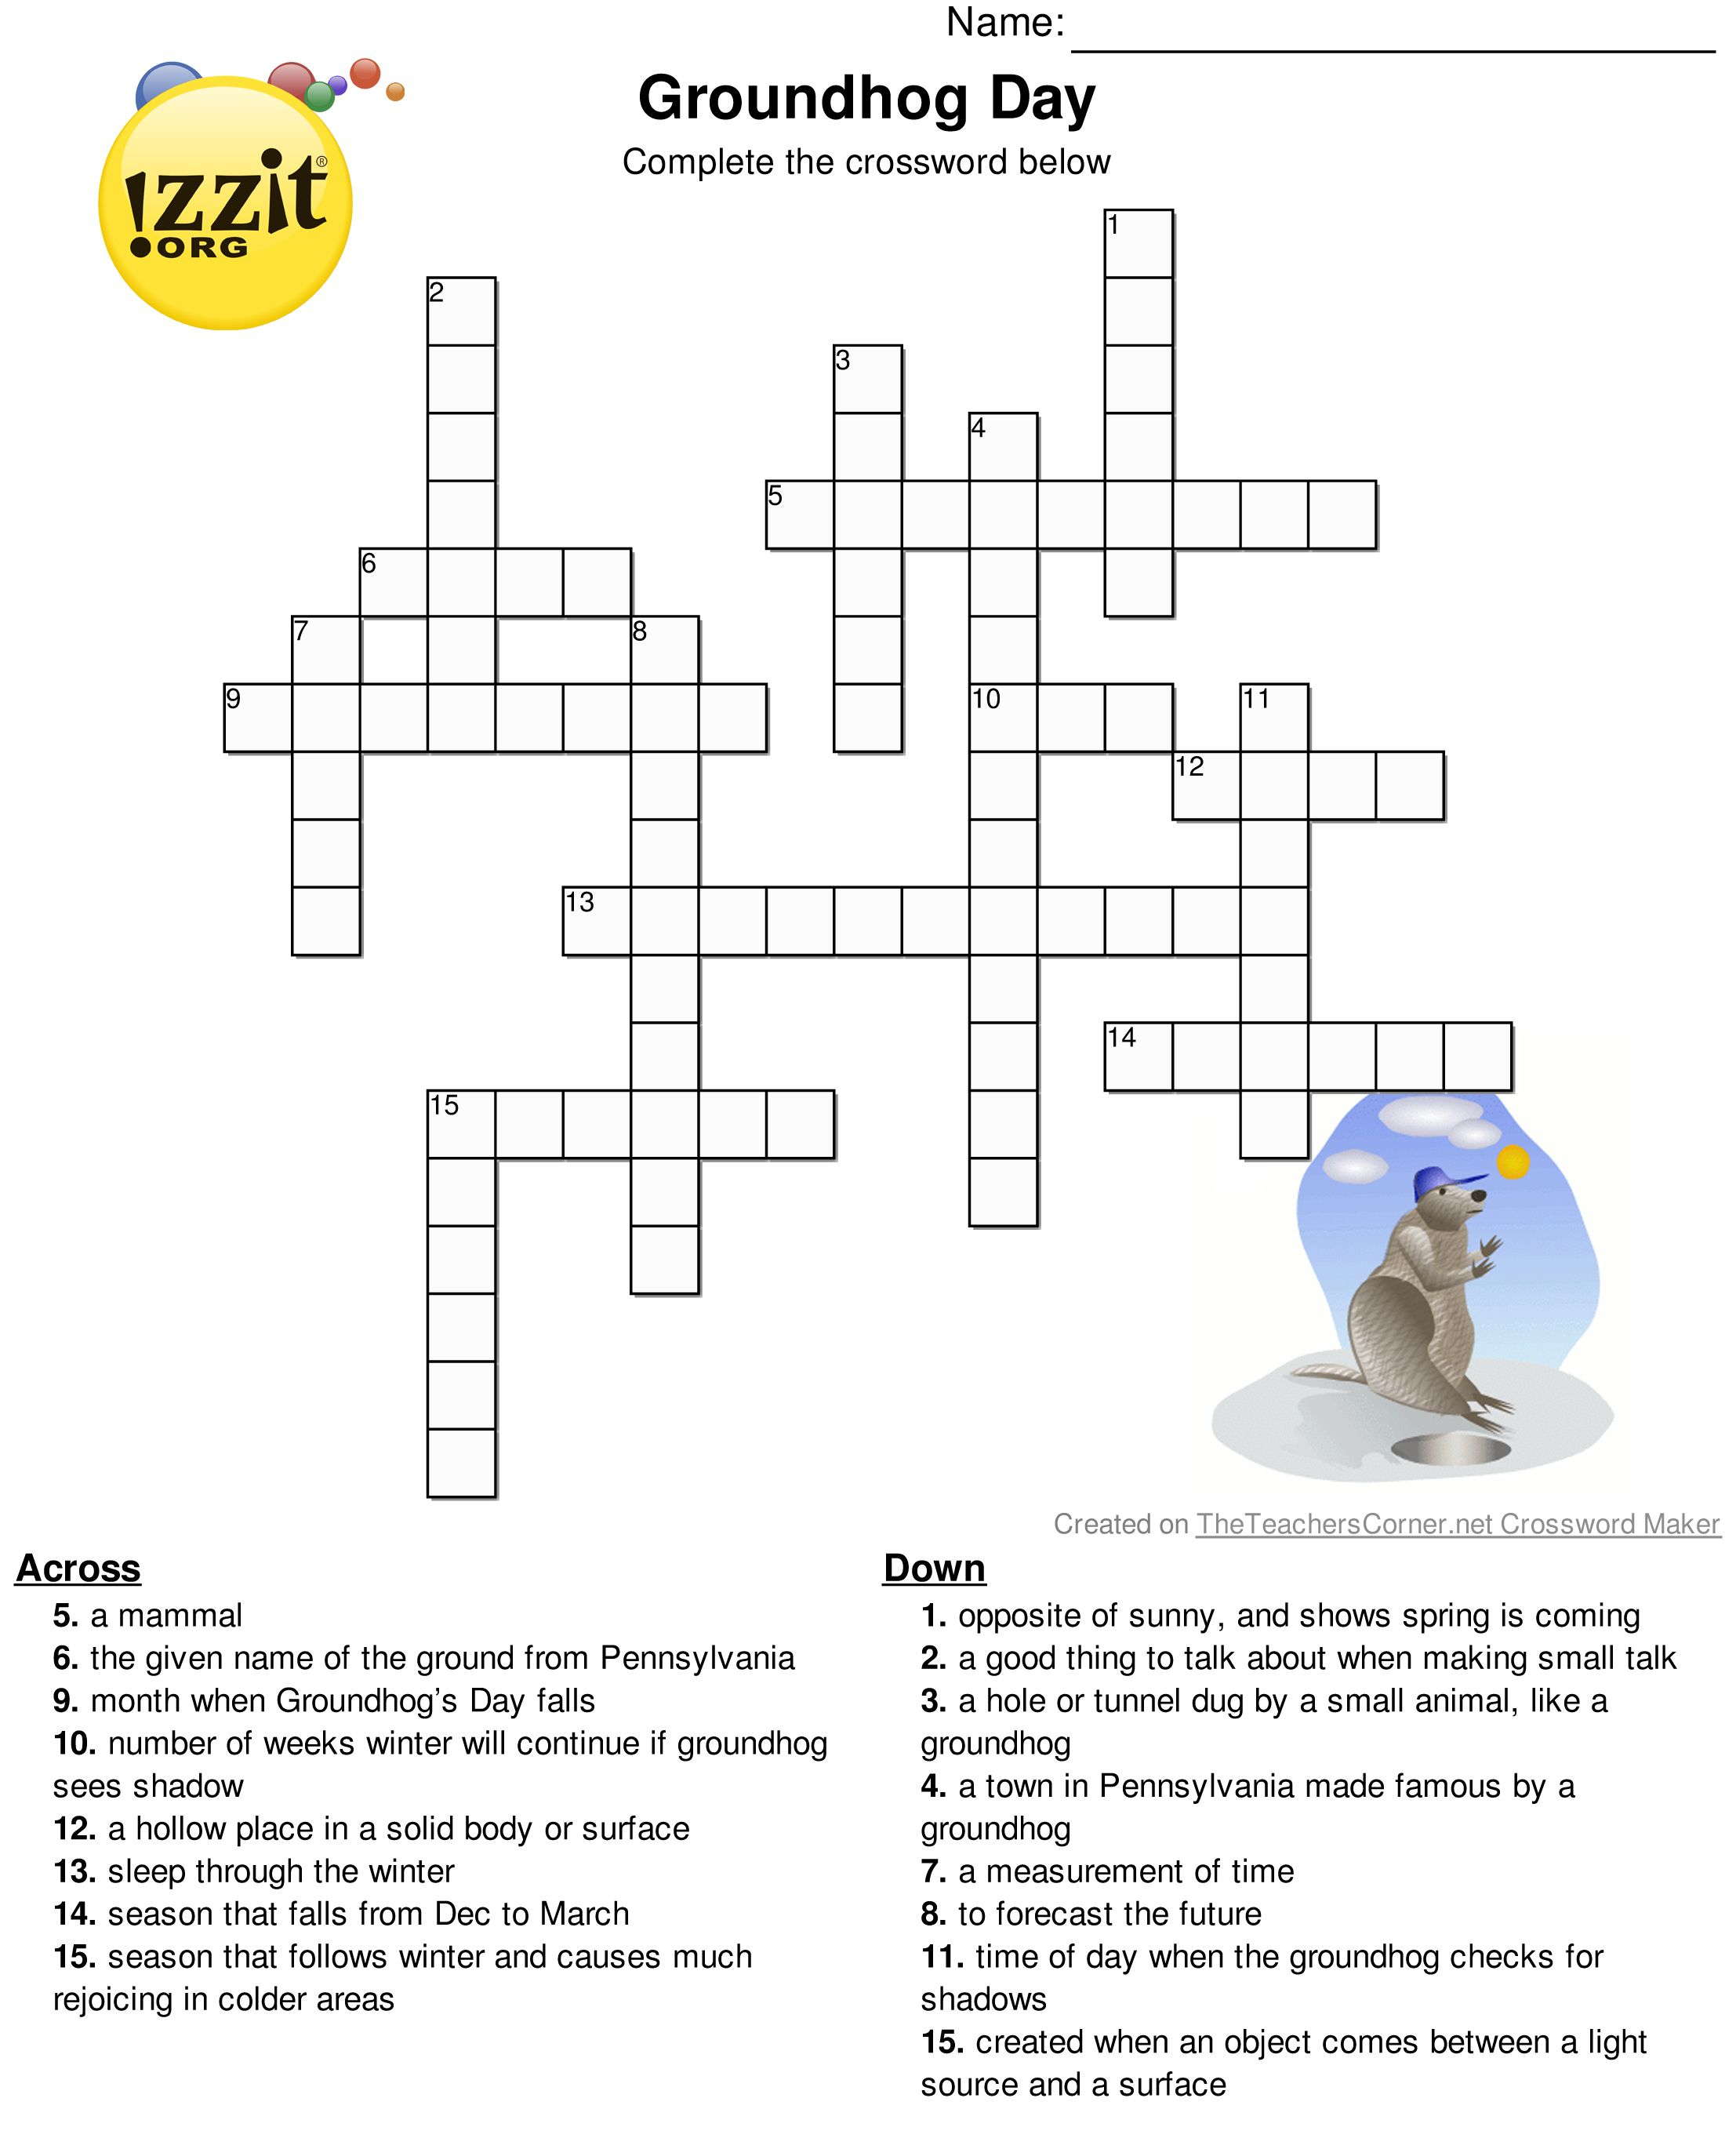 Pinterest - Groundhog Day Crossword Puzzles Printable